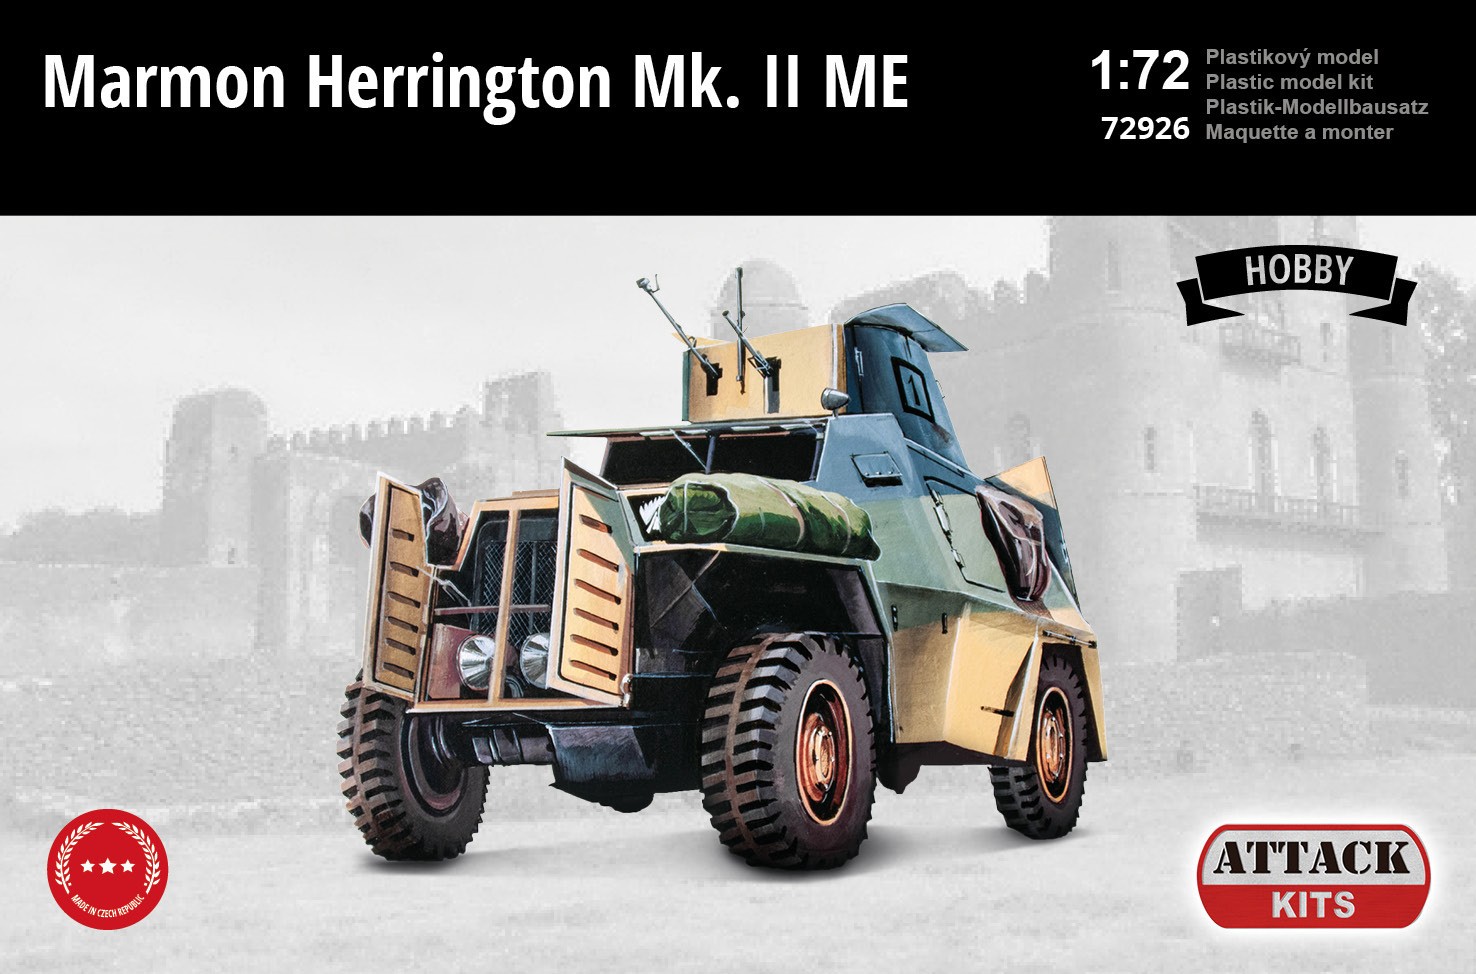 Maquette Attack Marmon-Herrington Mk.II ME Ligne de loisirs méditerra